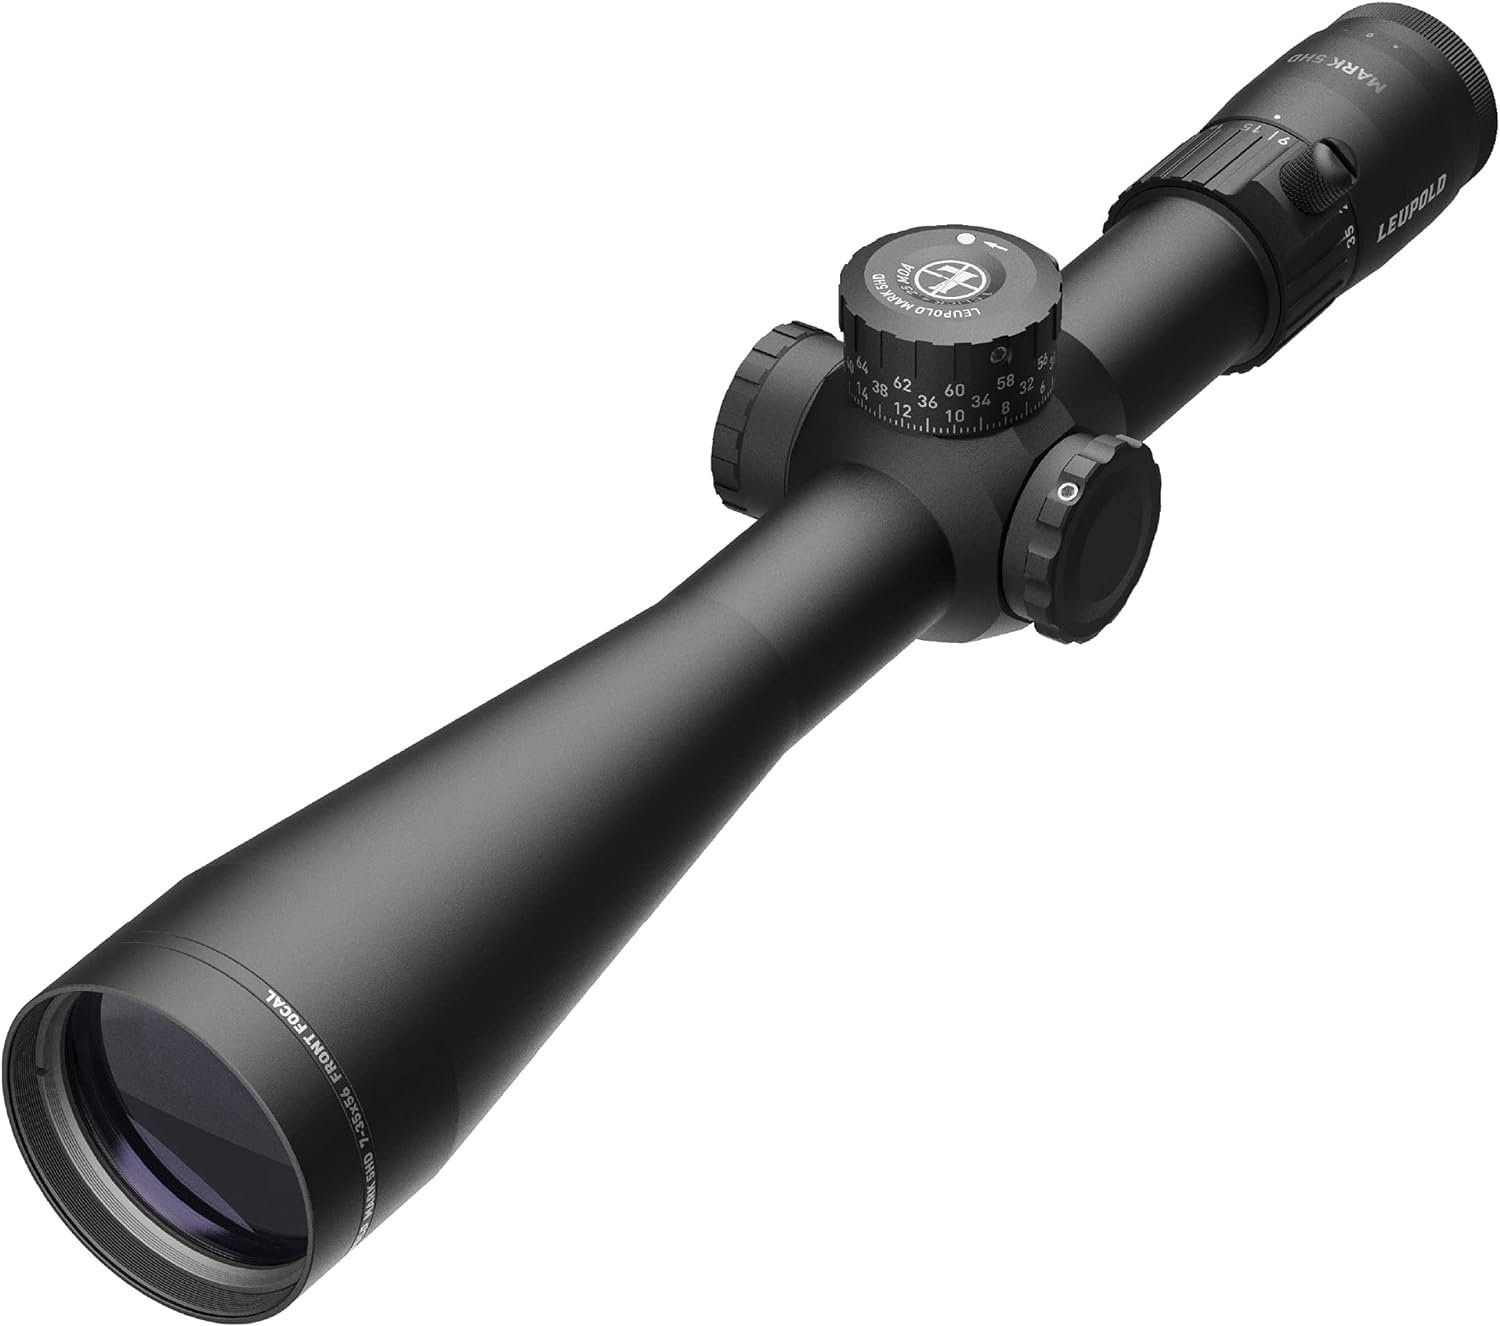 Leupold Mark 5HD Riflescope Review